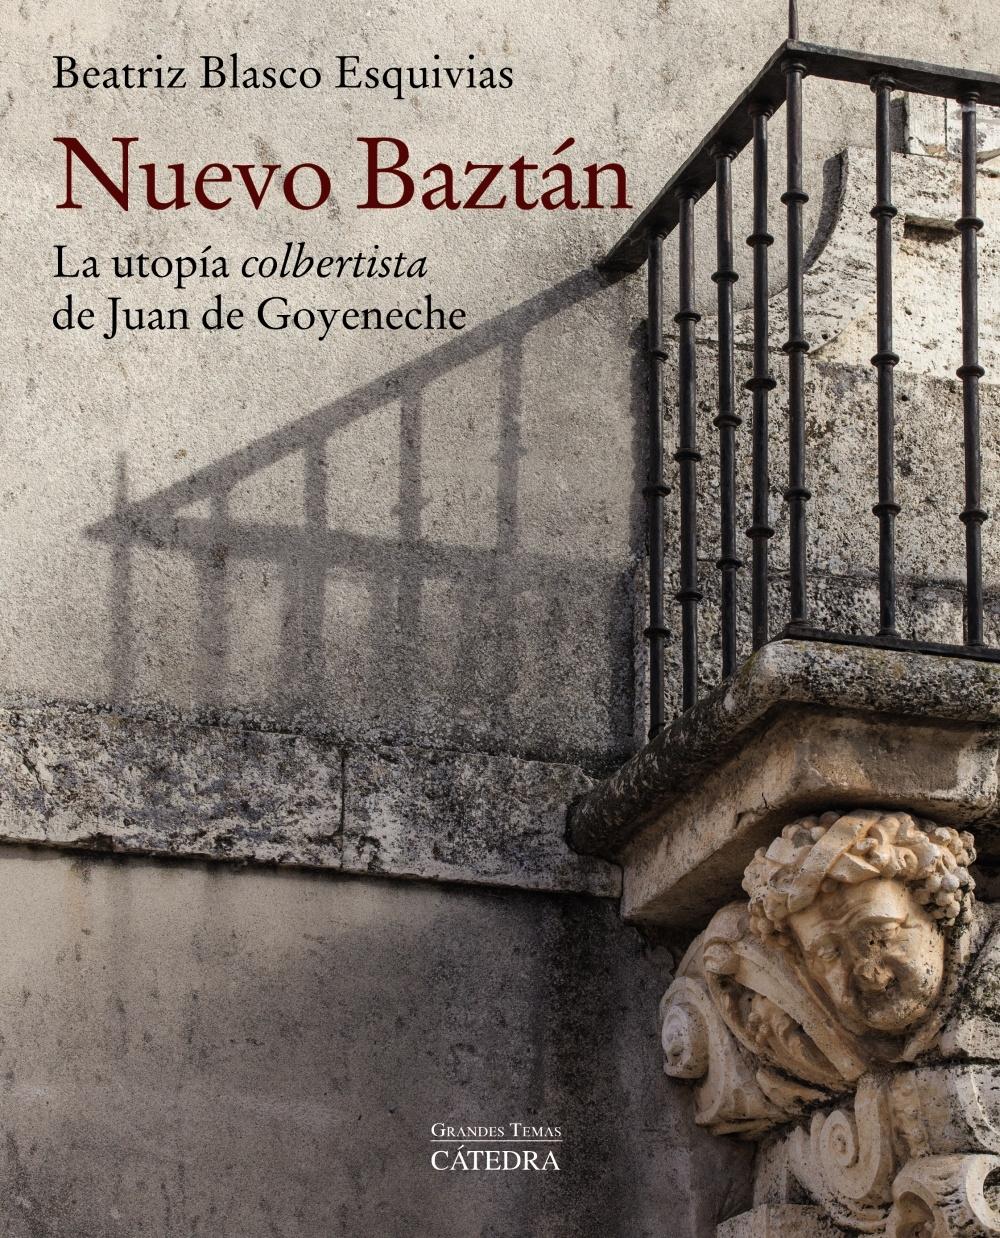 NUEVO BAZTÁN "La utopía  " colbertista "  de Juan de Goyeneche"